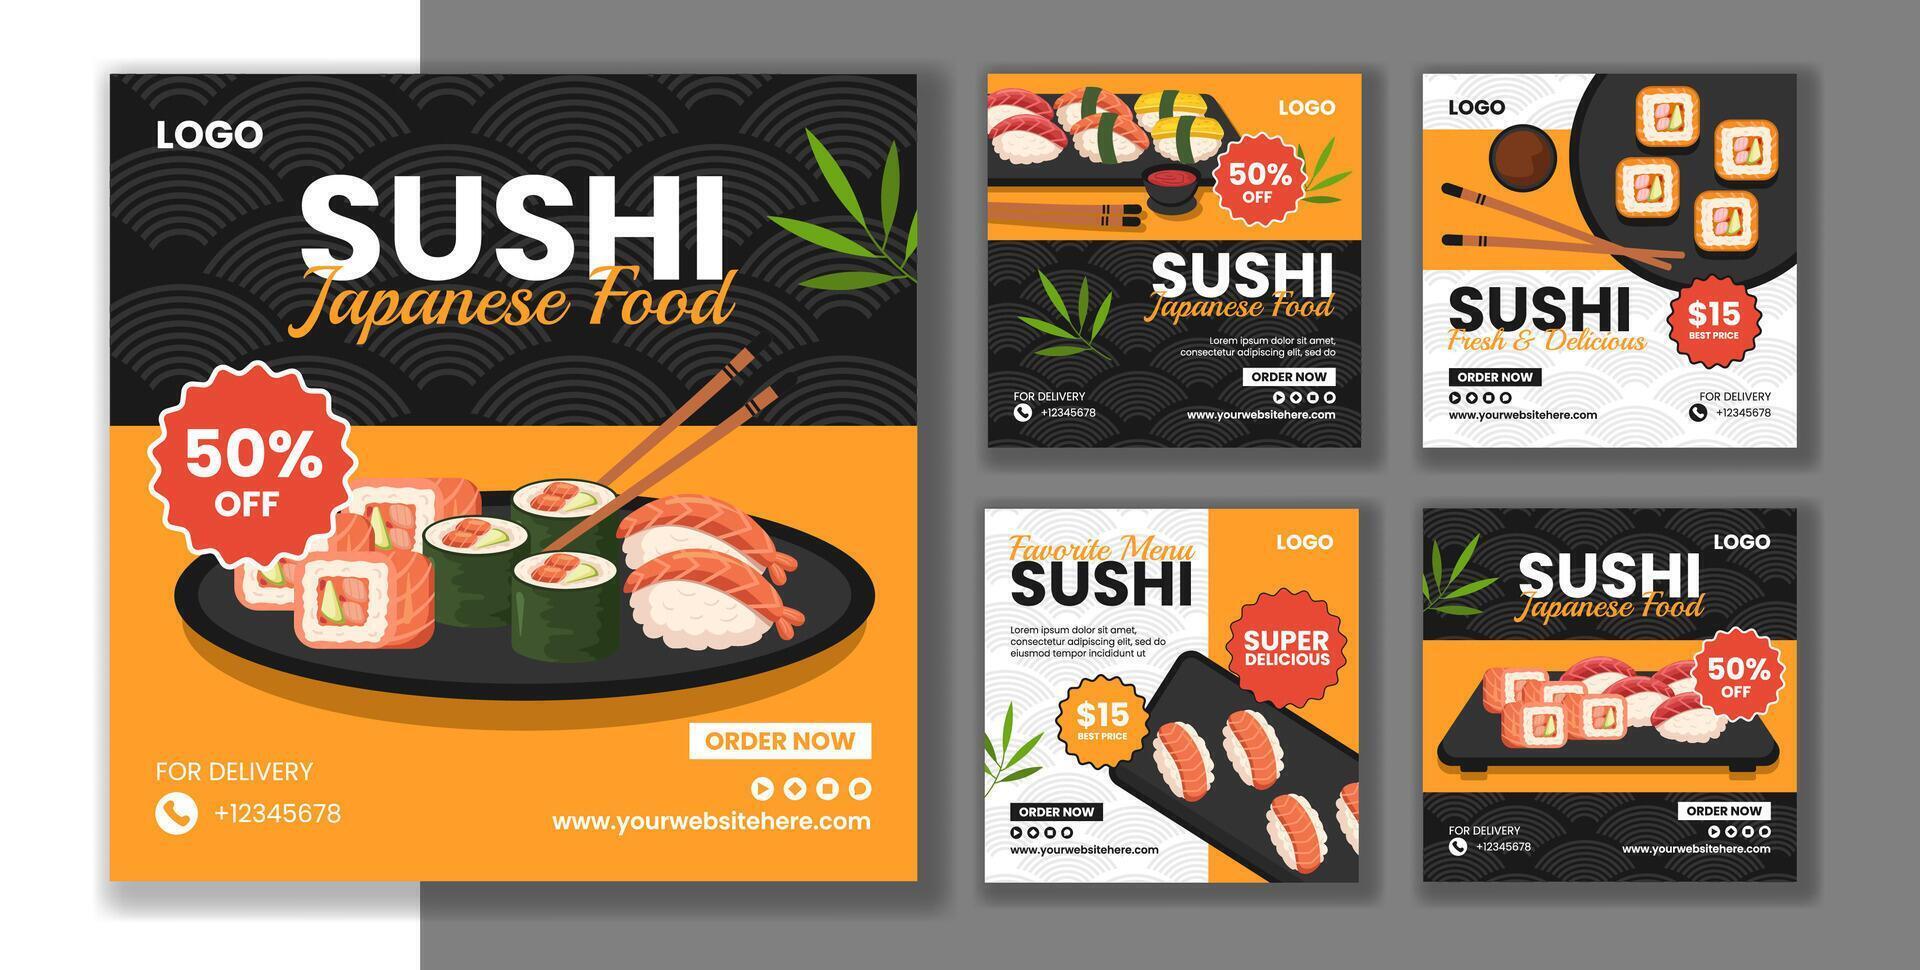 Sushi japonés comida social medios de comunicación enviar plano dibujos animados mano dibujado plantillas antecedentes ilustración vector